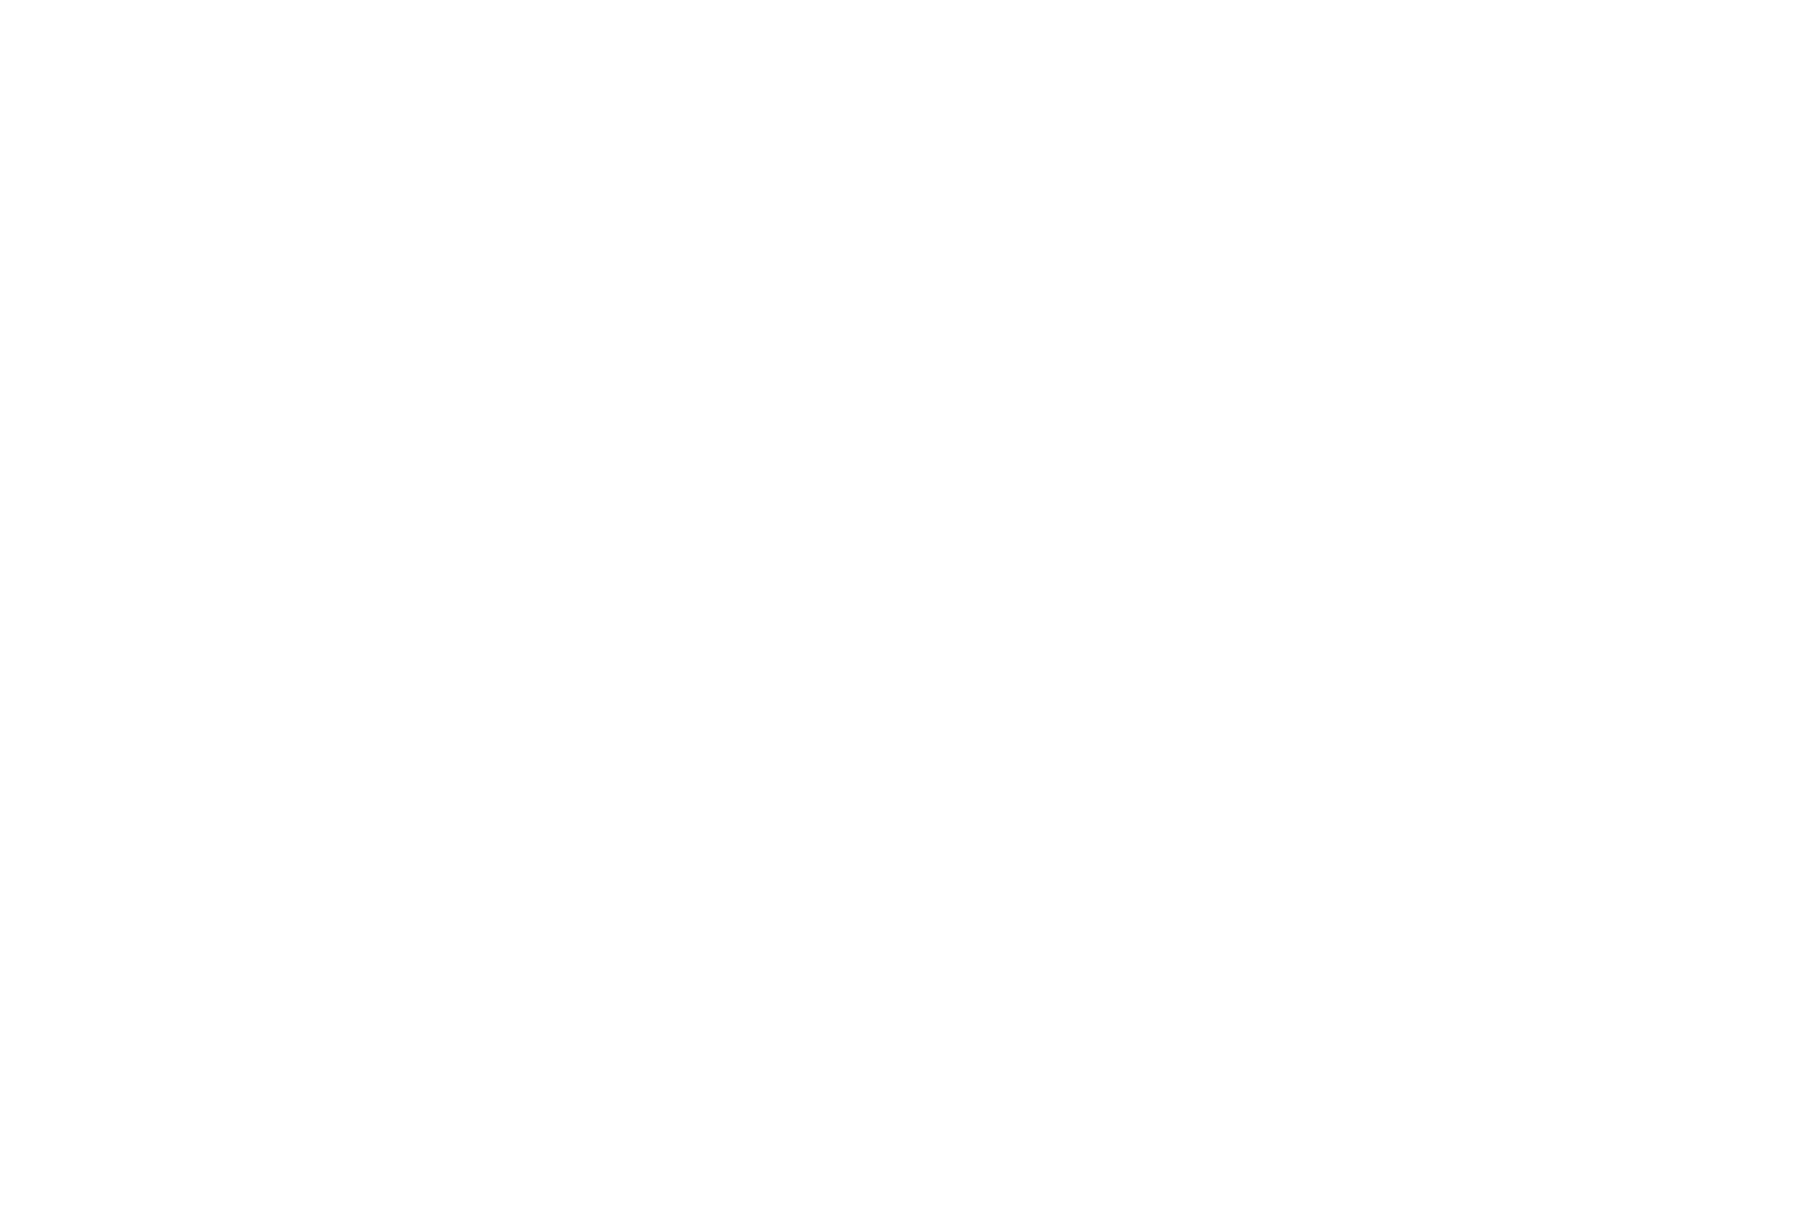 Ligatures and alternates of Ecatherina font, example.